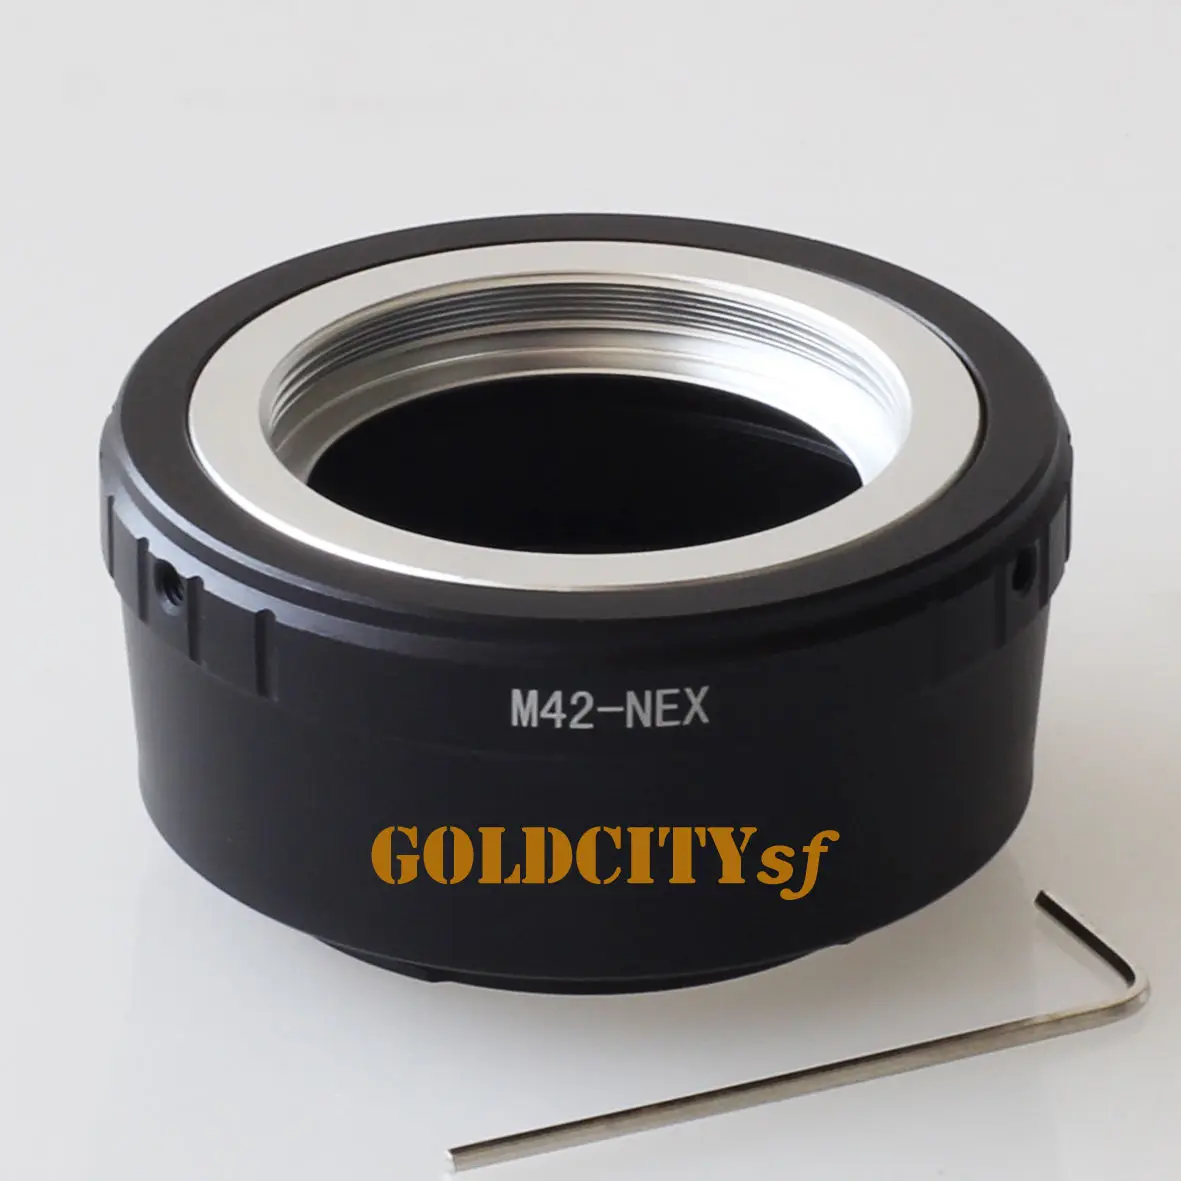 

Переходное кольцо для объектива камеры sony, переходное кольцо для объектива к E-mount NEX 42 мм, для sony 1/3/5/5N/6/7/5T A7 A7 I A7r A5100 A7s A3000 A5000 A6000